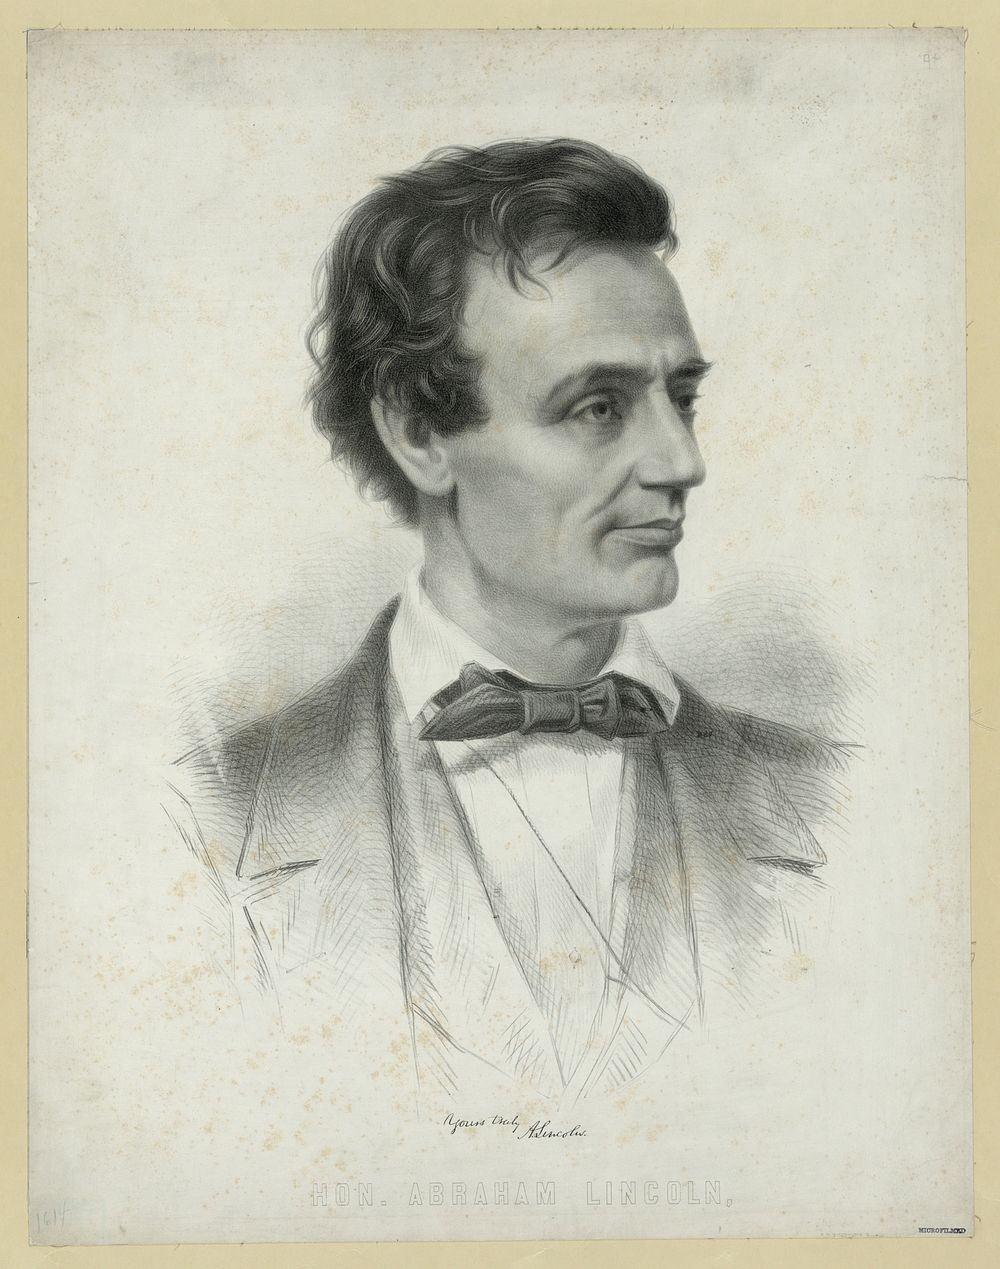 Hon. Abraham Lincoln,